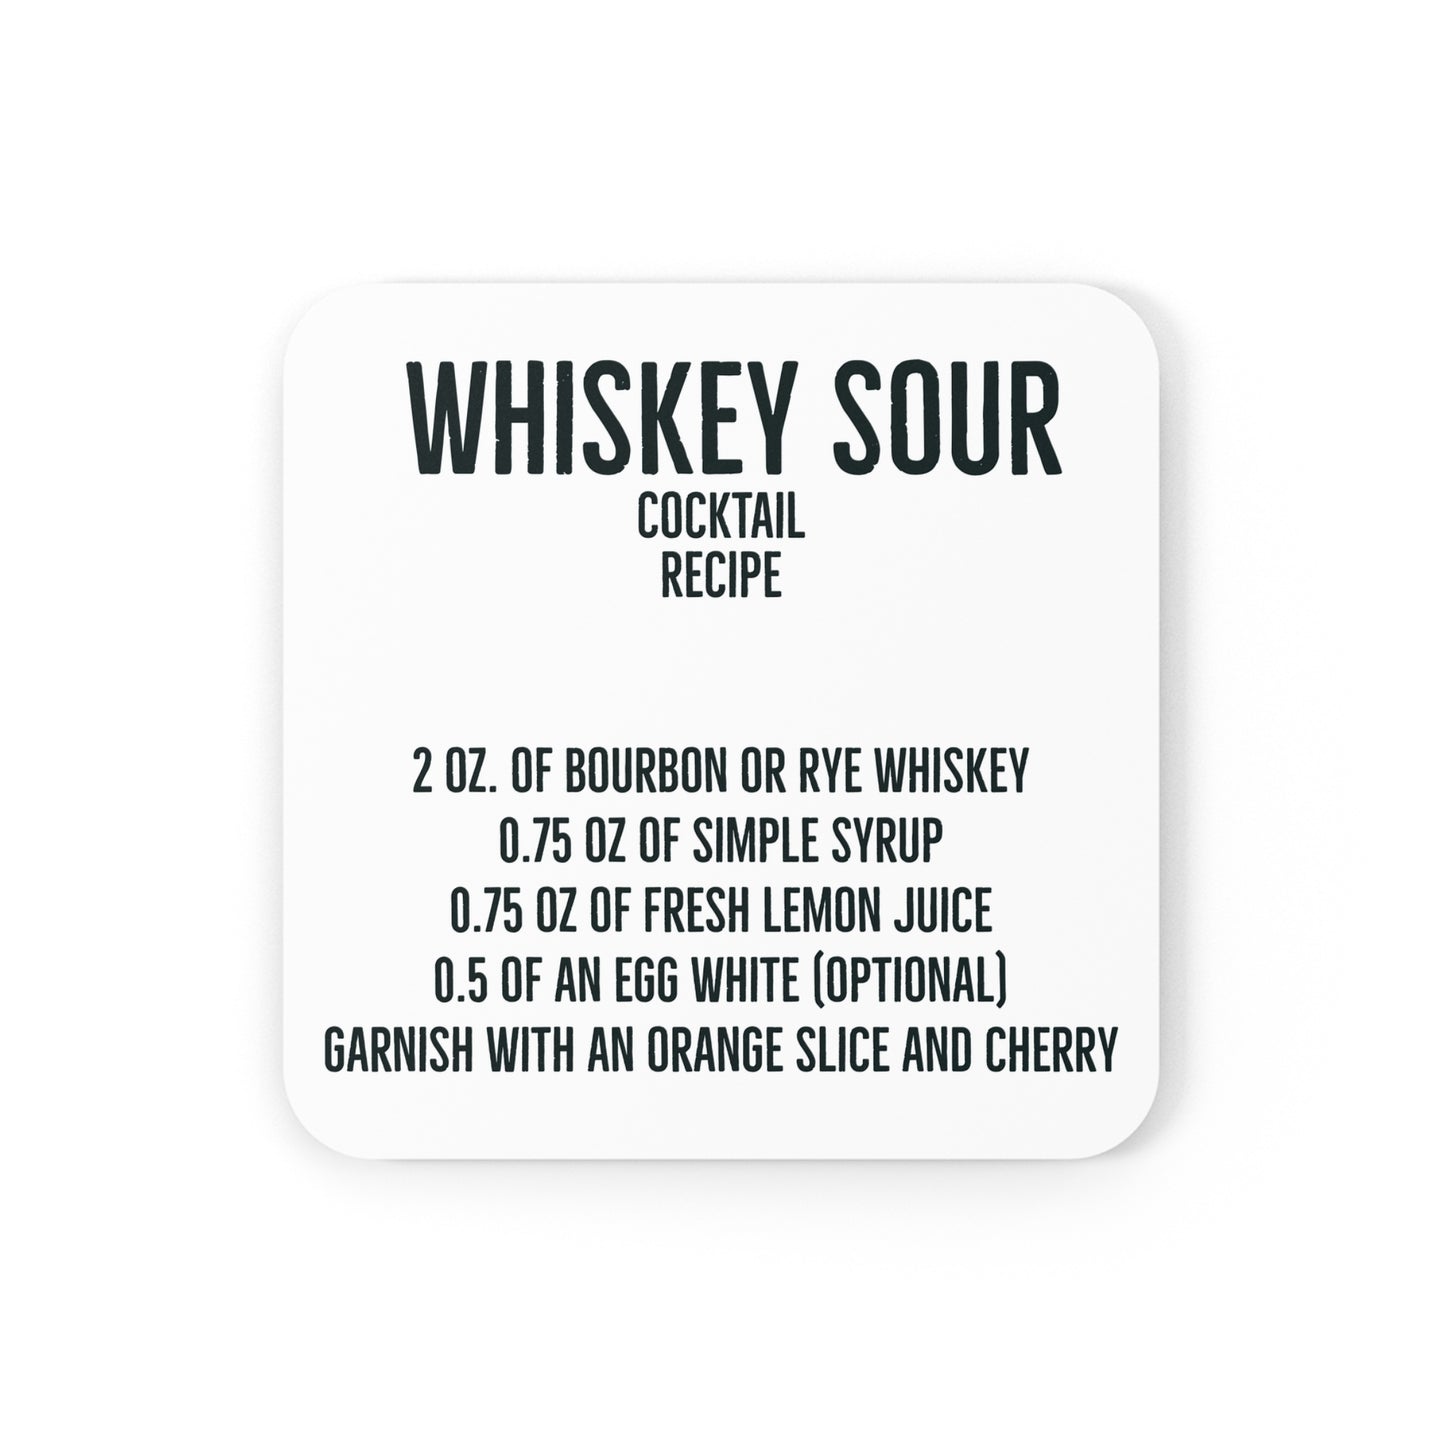 Whiskey Sour Bourbon Cocktail Recipe Coaster Set mens gift bar housewarming hostess gift